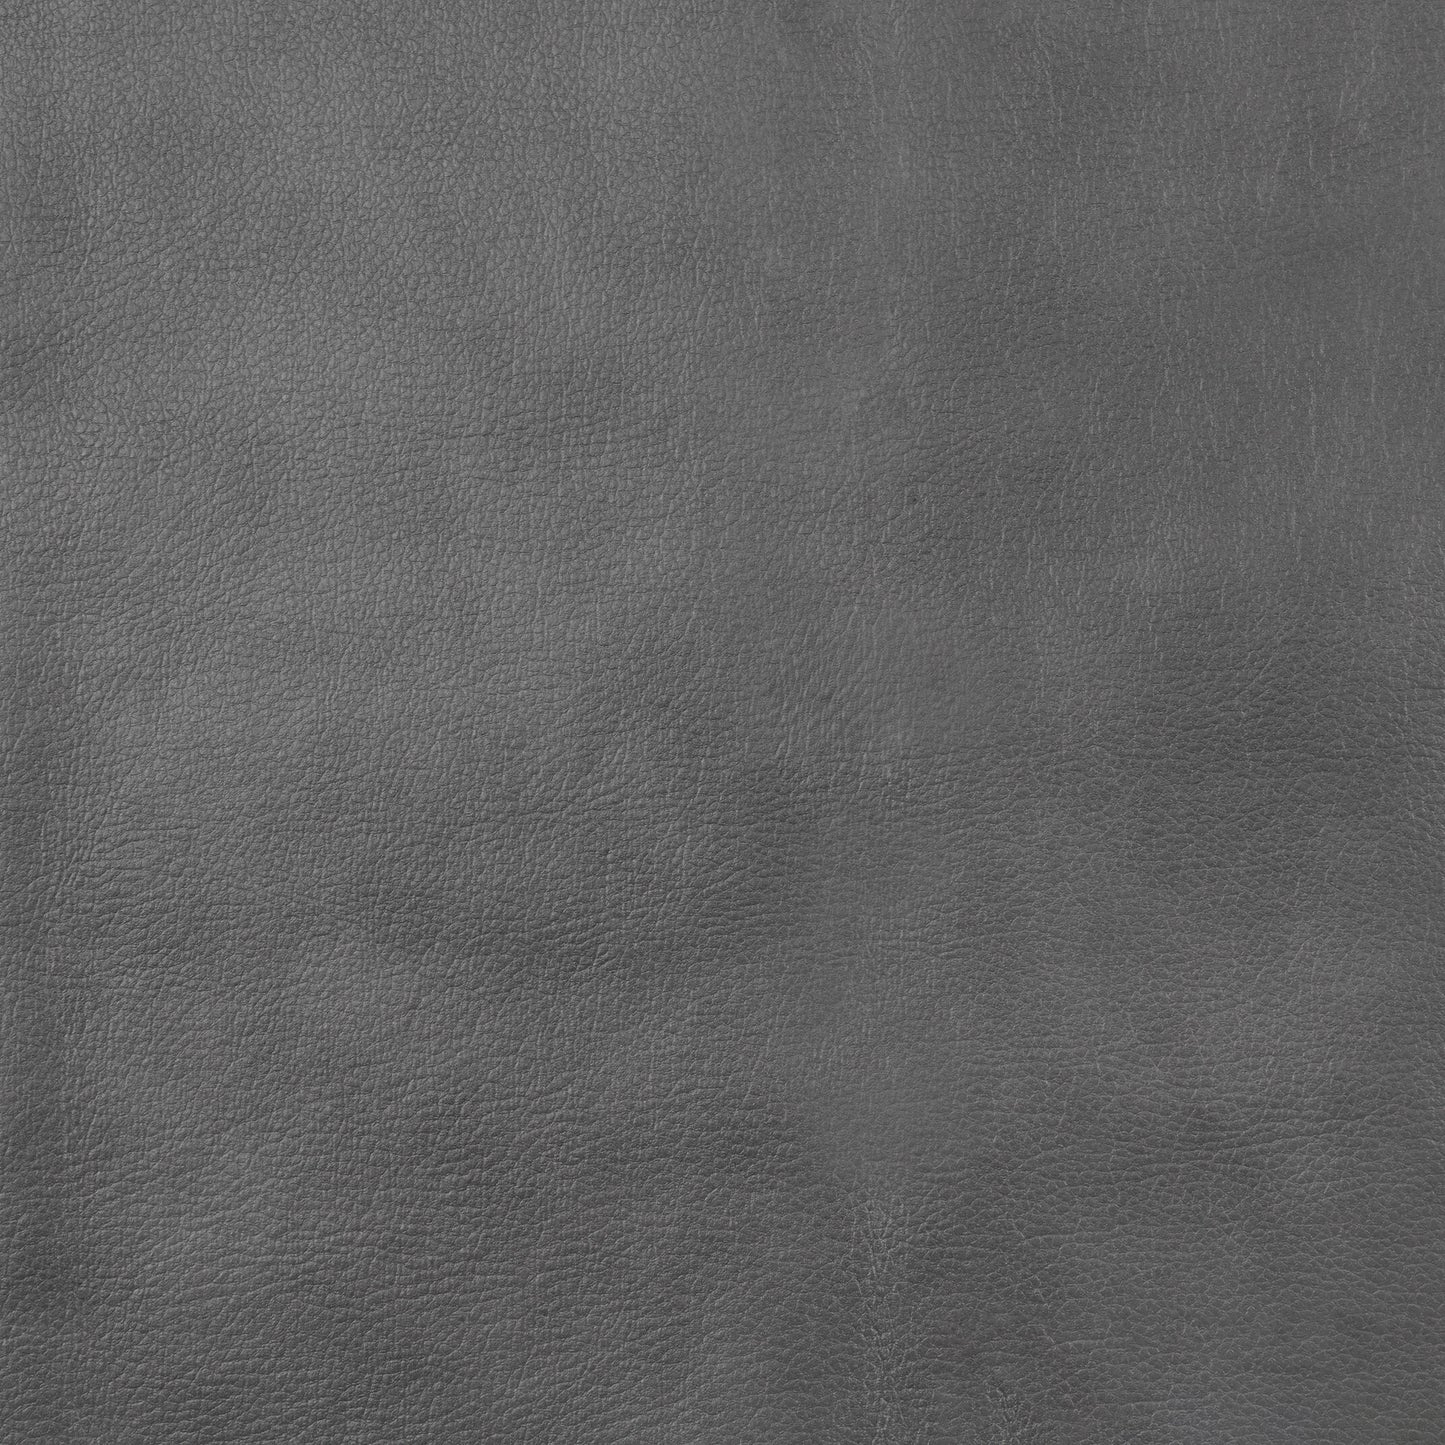 Conrad 2-piece Living Room Set Grey